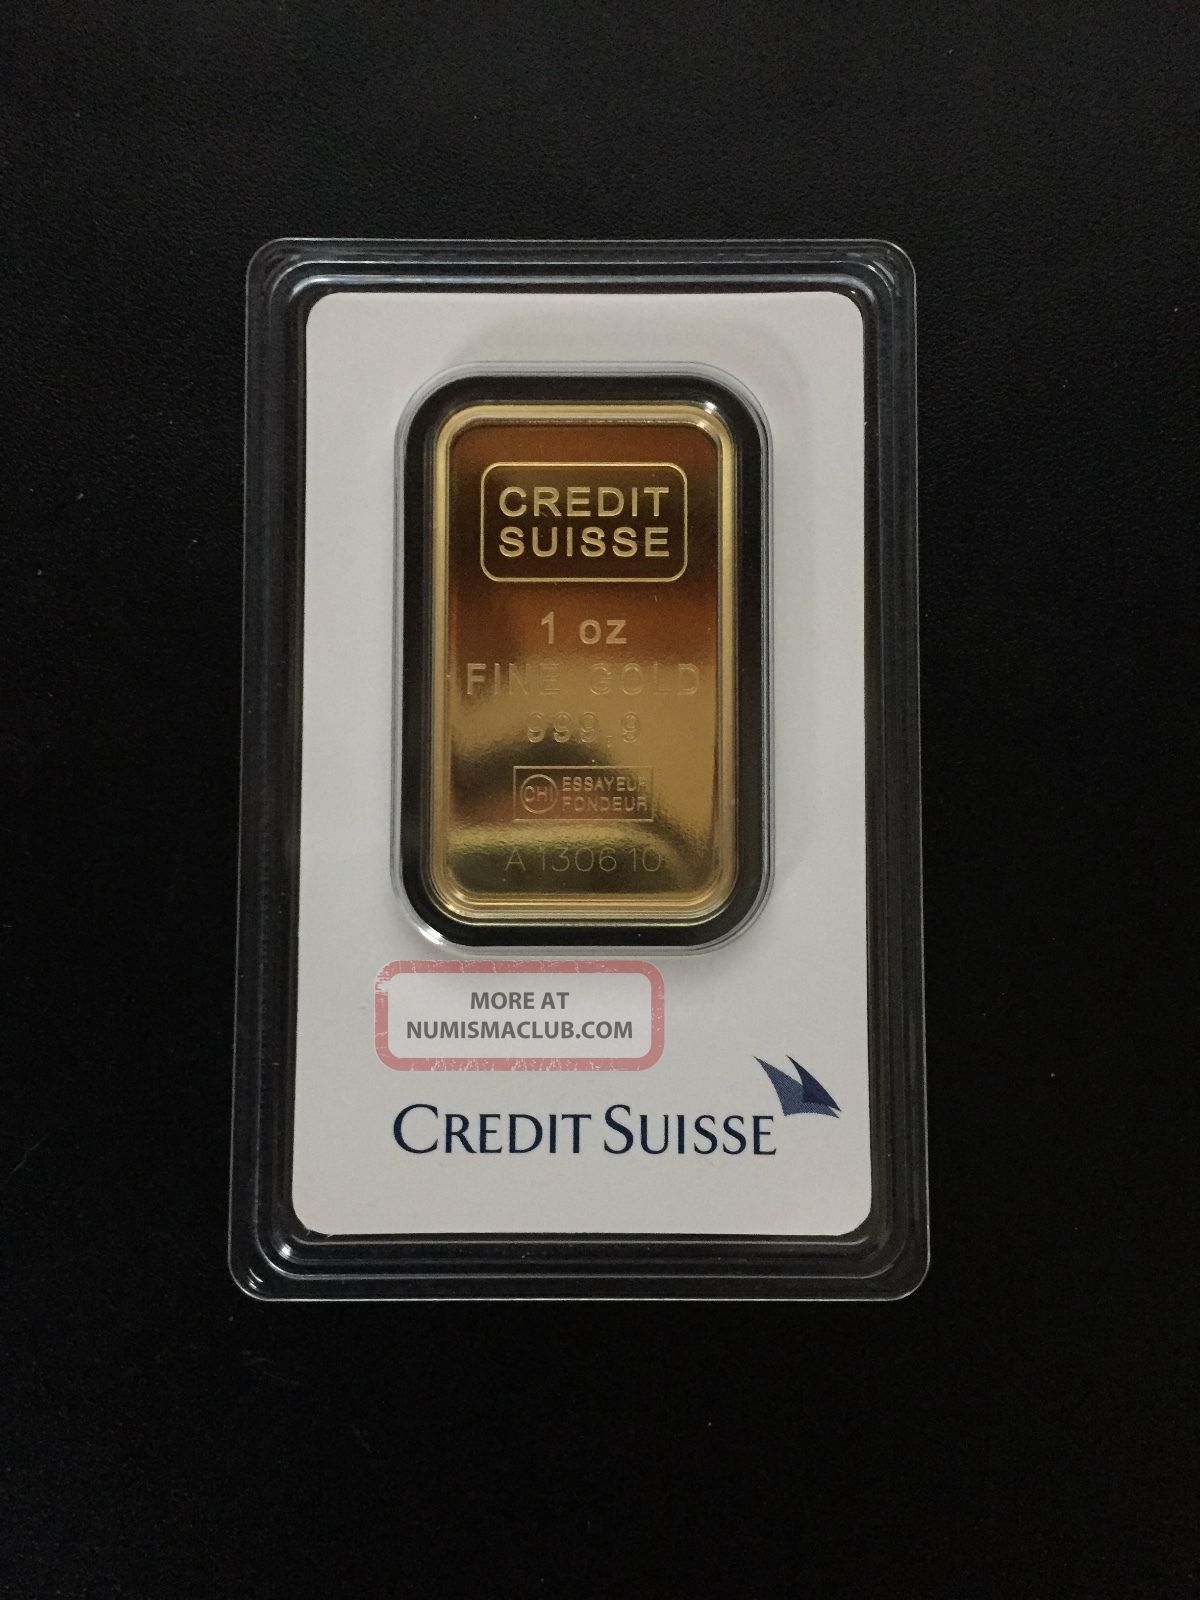 1 oz credit suisse gold bar dimensions - iopfolder